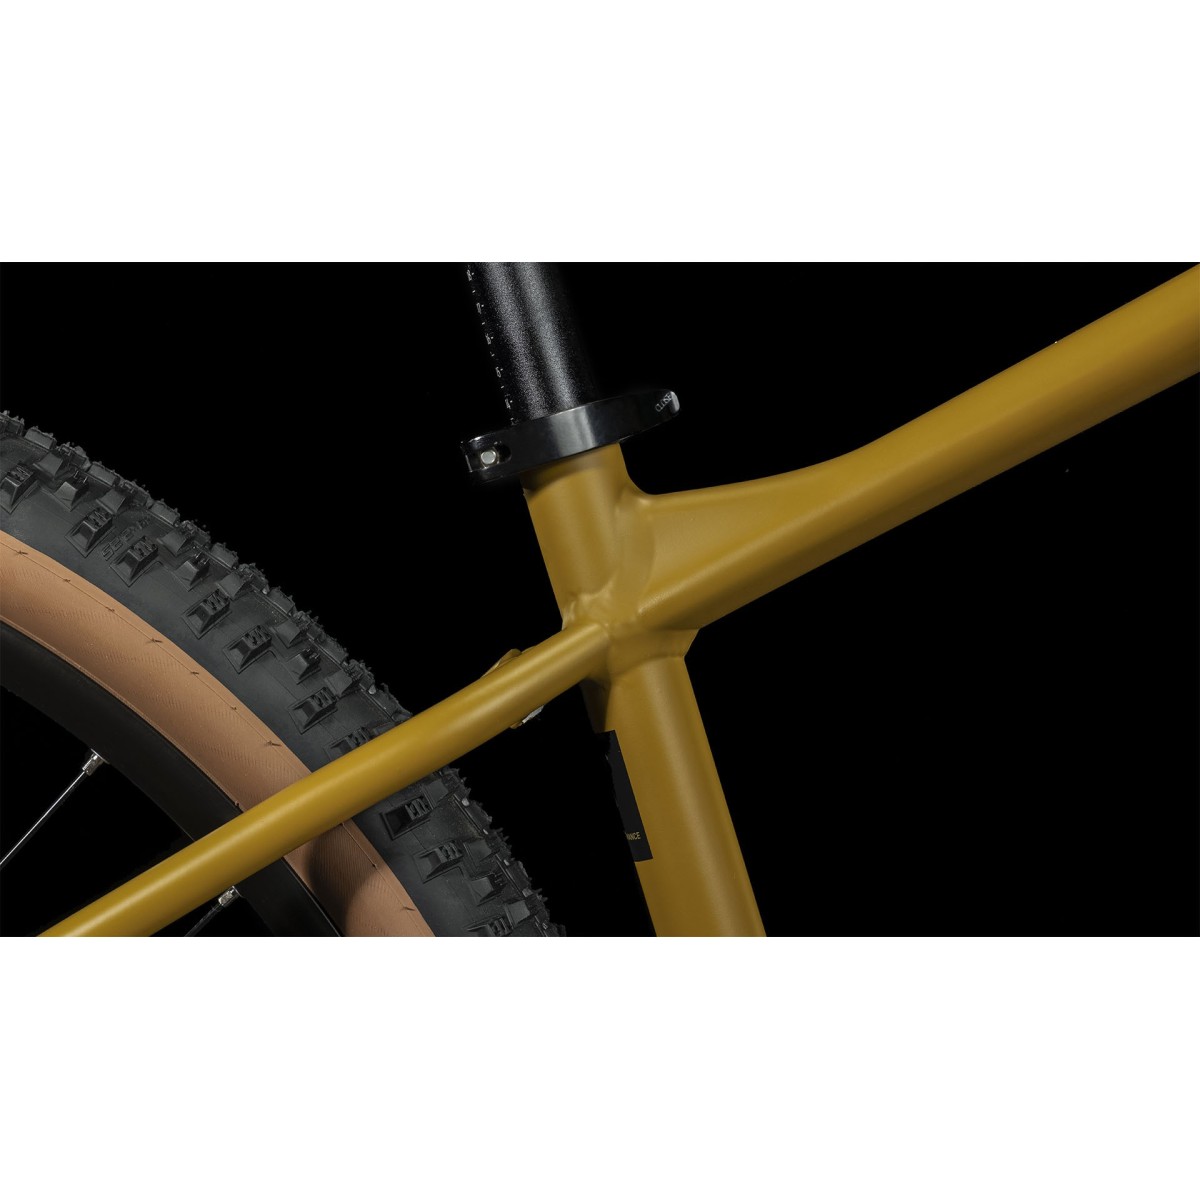 CUBE AIM EX 29 kalnu velosipēds - caramel/black - 2023